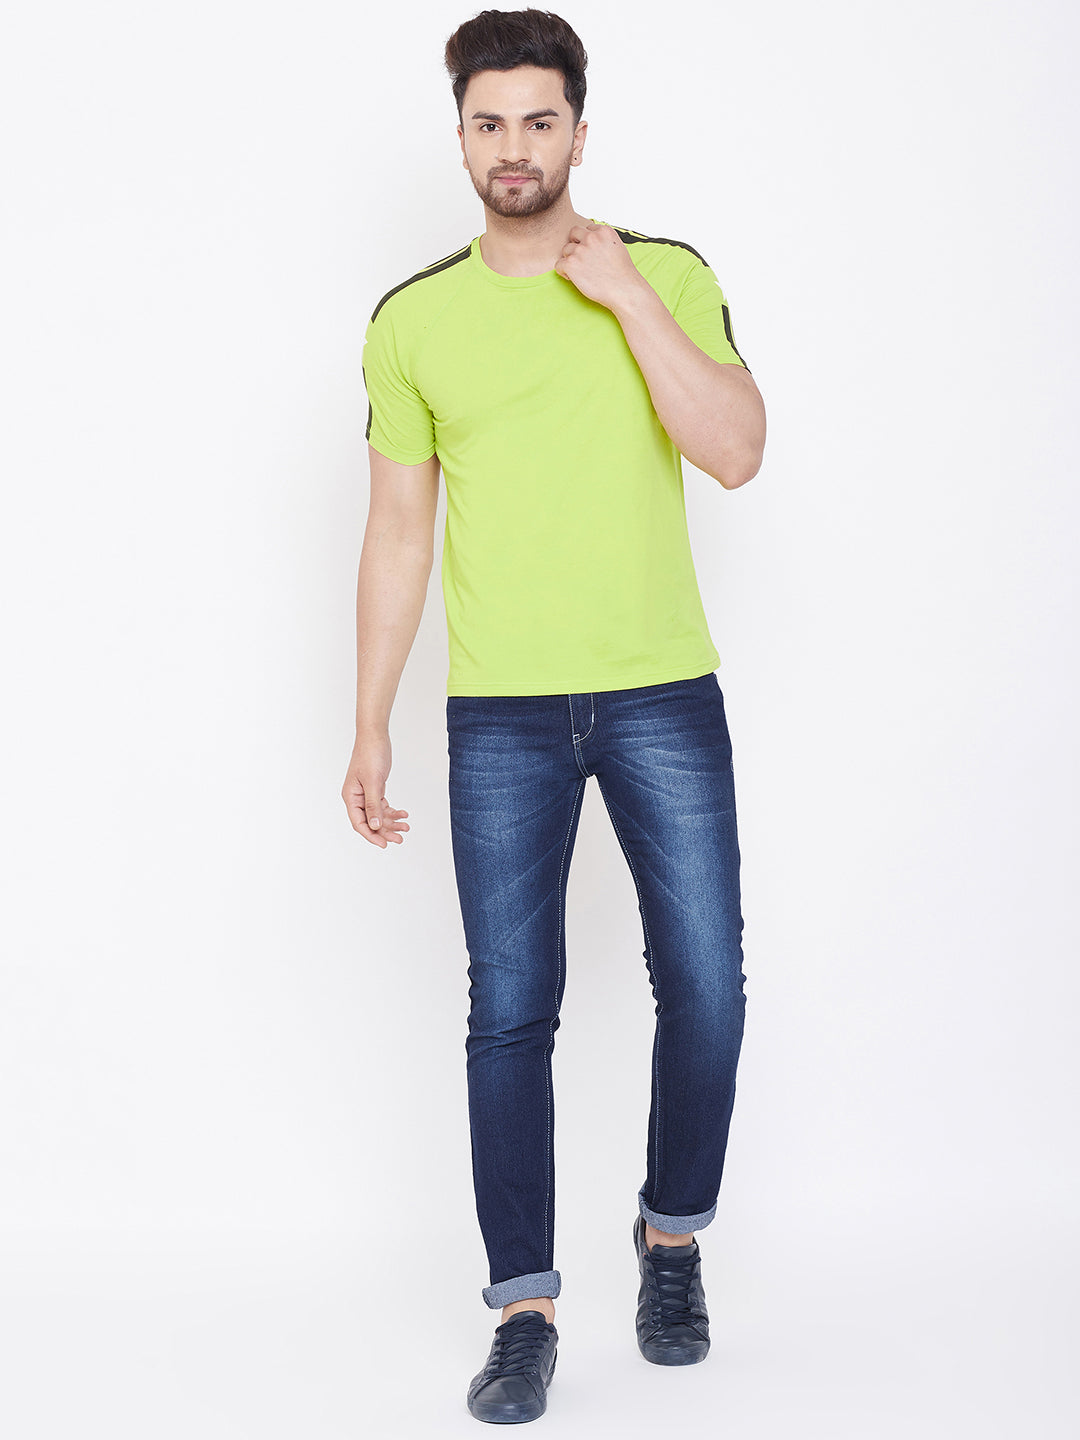 Neon Green Printed Men's Half Sleeves Round Neck T-Shirt